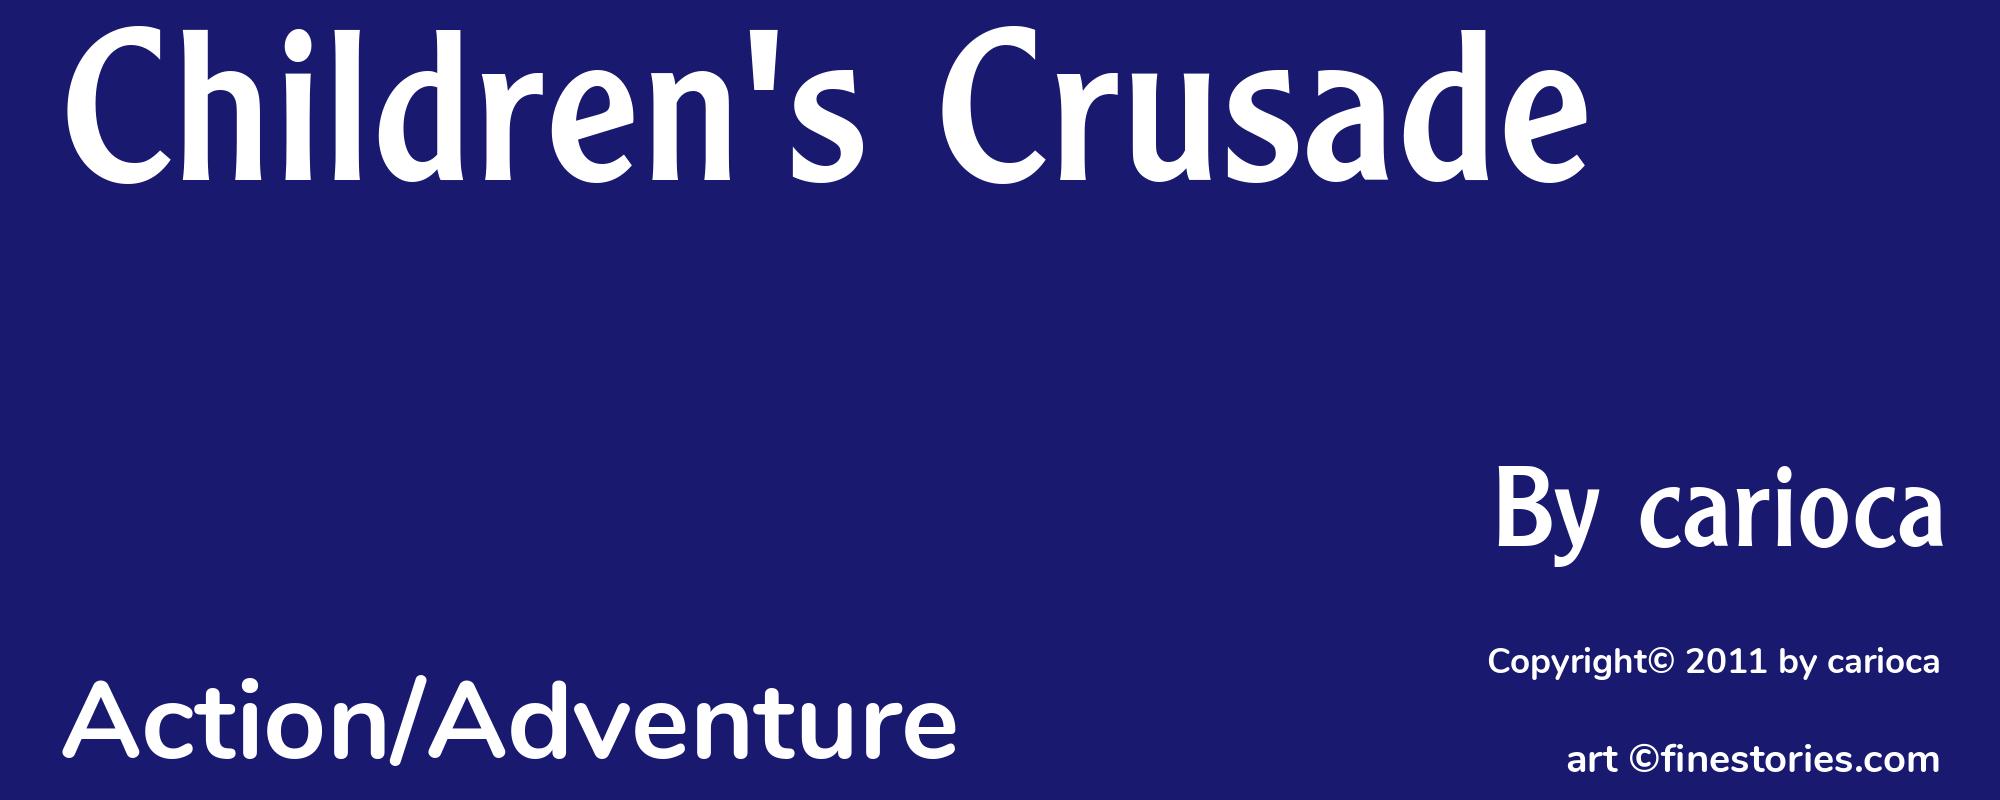 Children's Crusade - Cover